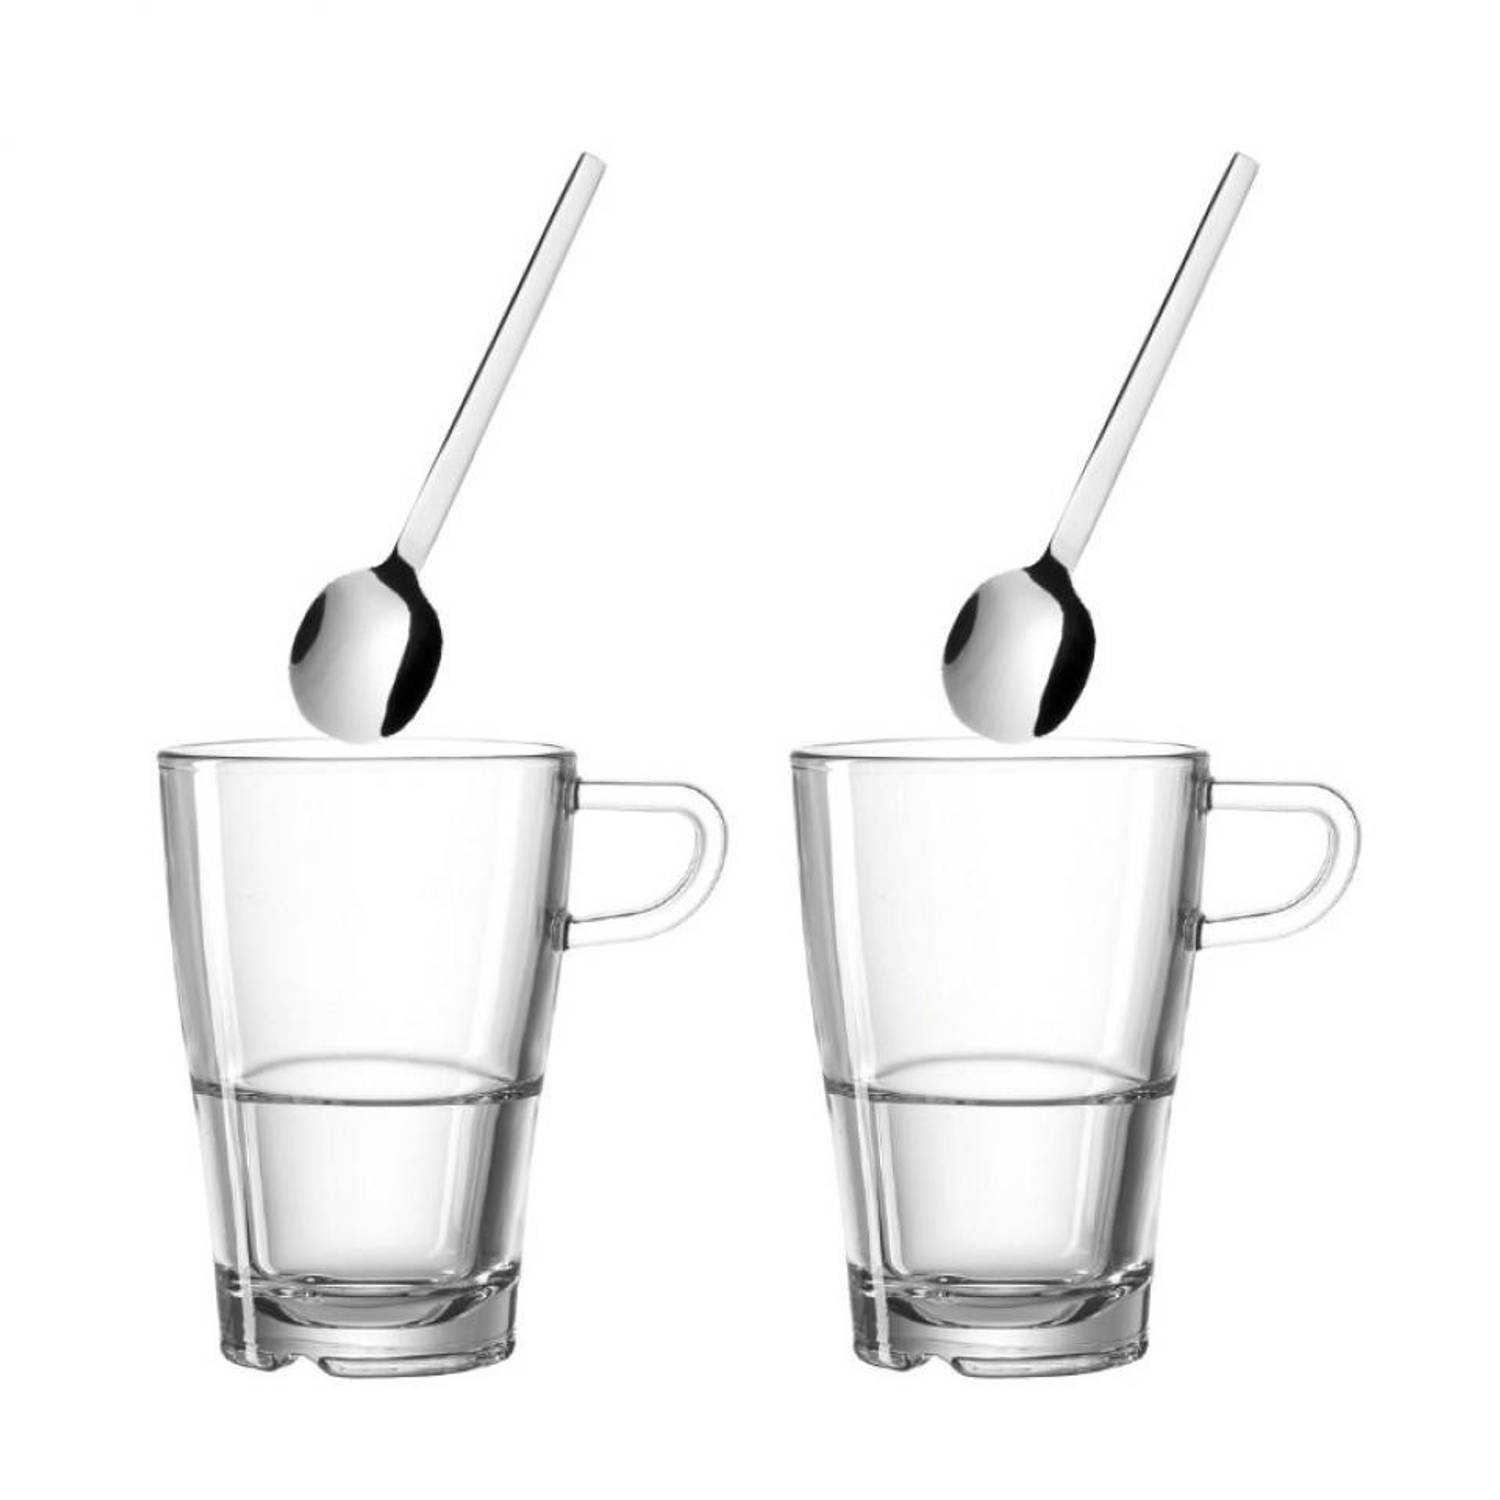 Leonardo Senso latte macchiato - 2-delig | Blokker